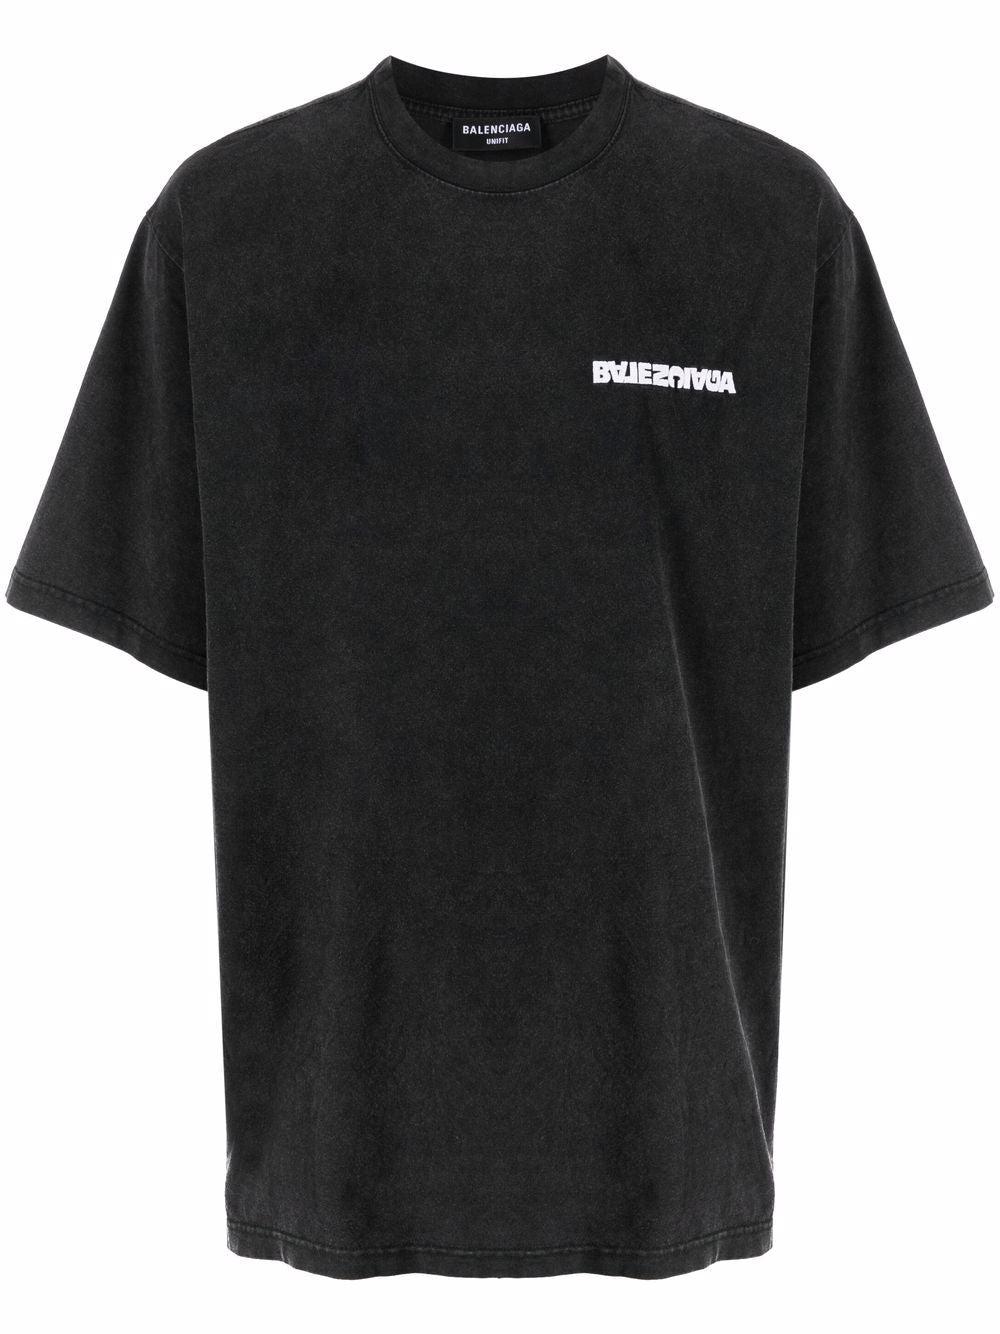 Balenciaga Cotton Turn Logo T-shirt in Nero (Black) for Men - Save 35% |  Lyst